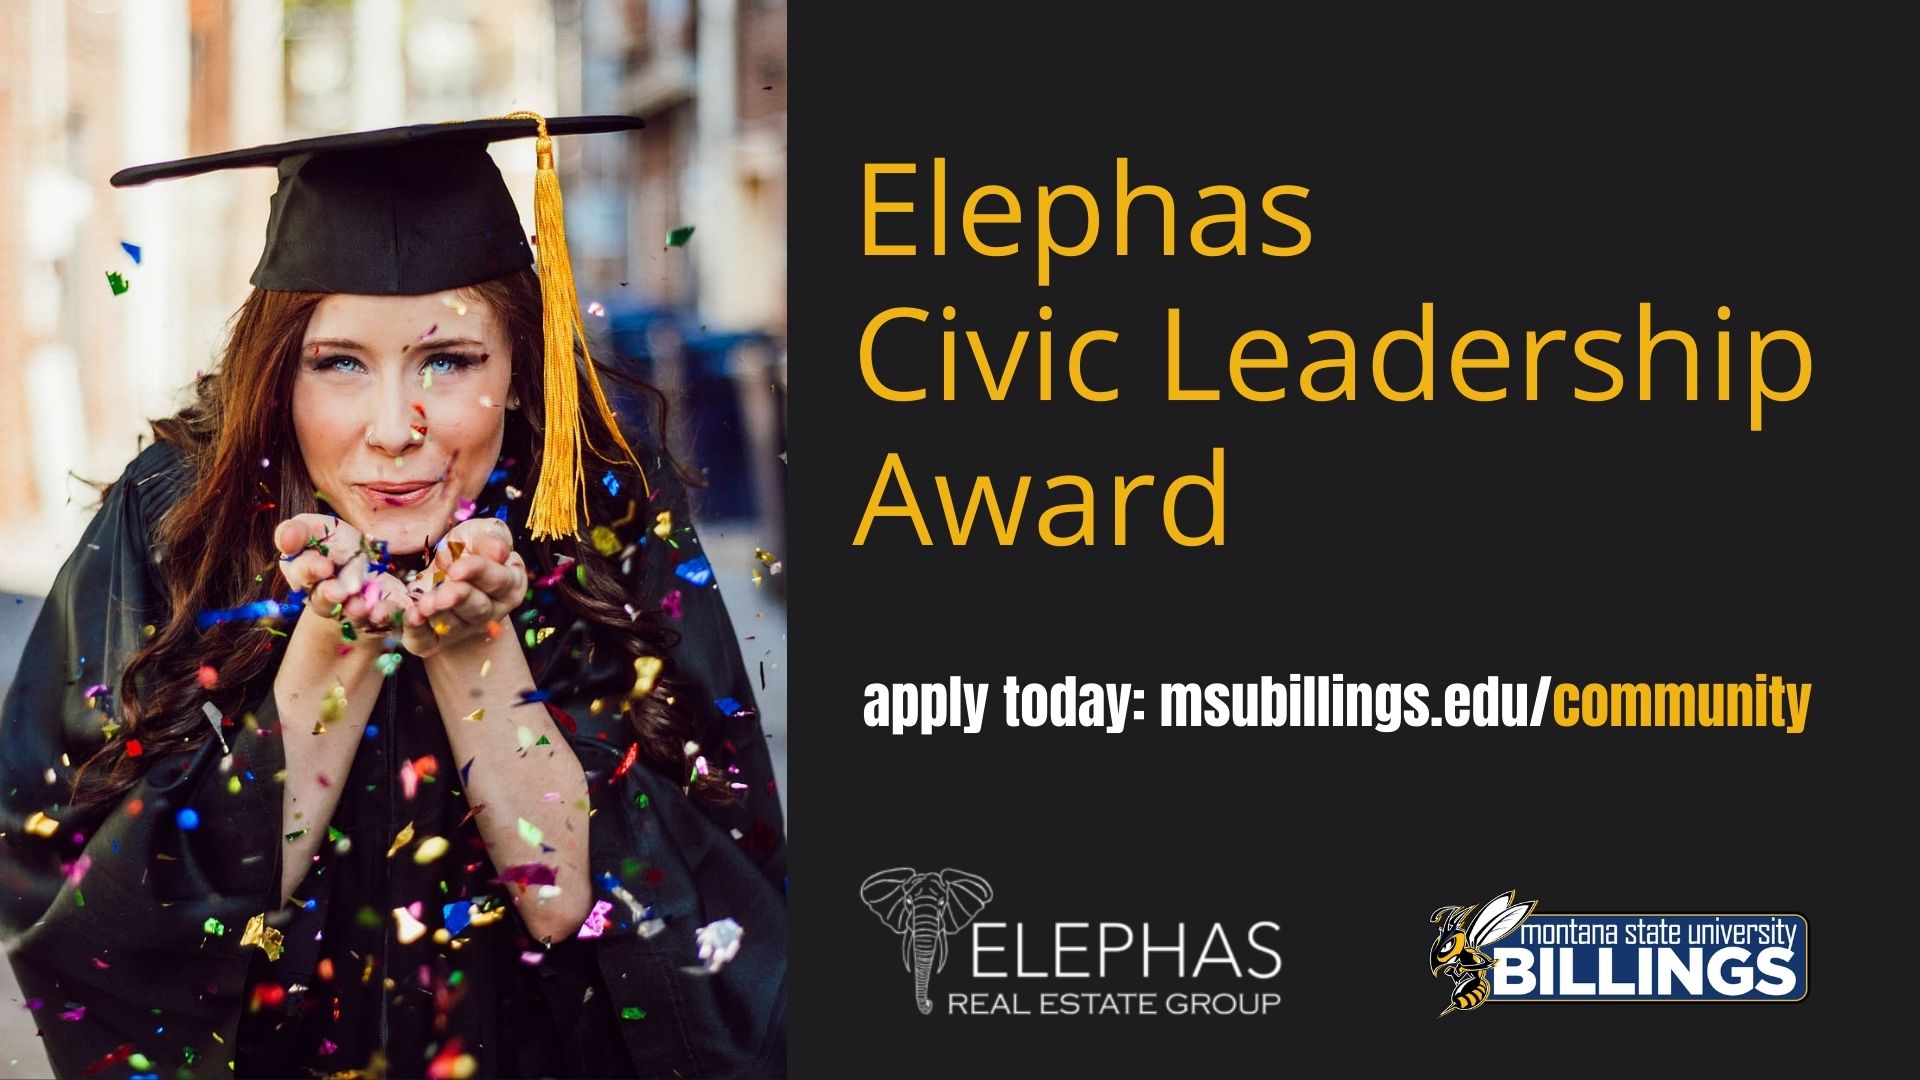 Elephas Civic Leadership Award. Apply today.